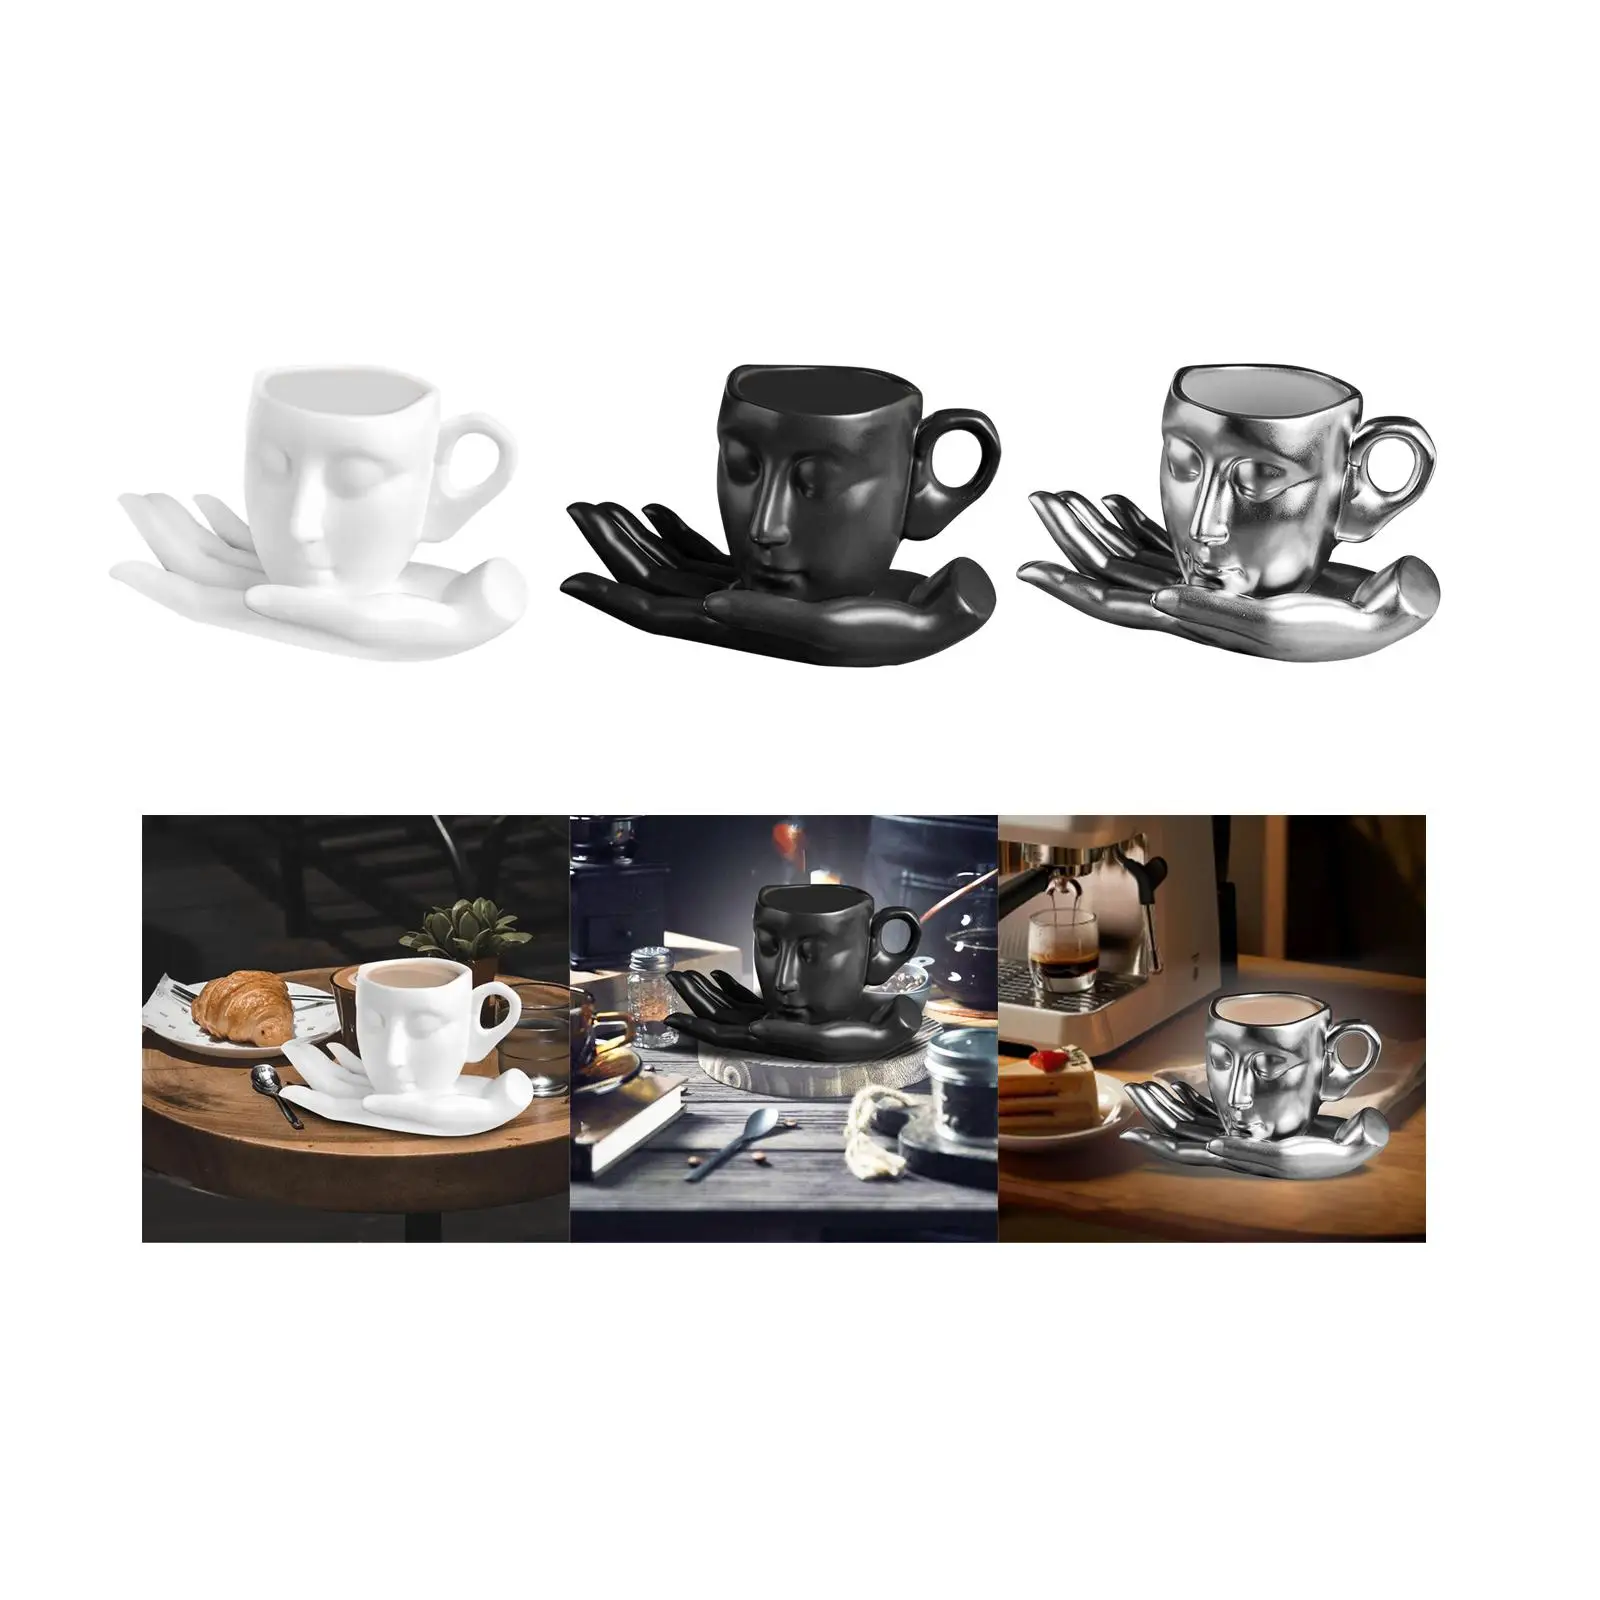 3D Human Face Mug Table Arts Novelty Espresso Mugs 260ml Ceramic Coffee Mug for Cappuccino Beverage Kitchen Latte Valentine Day